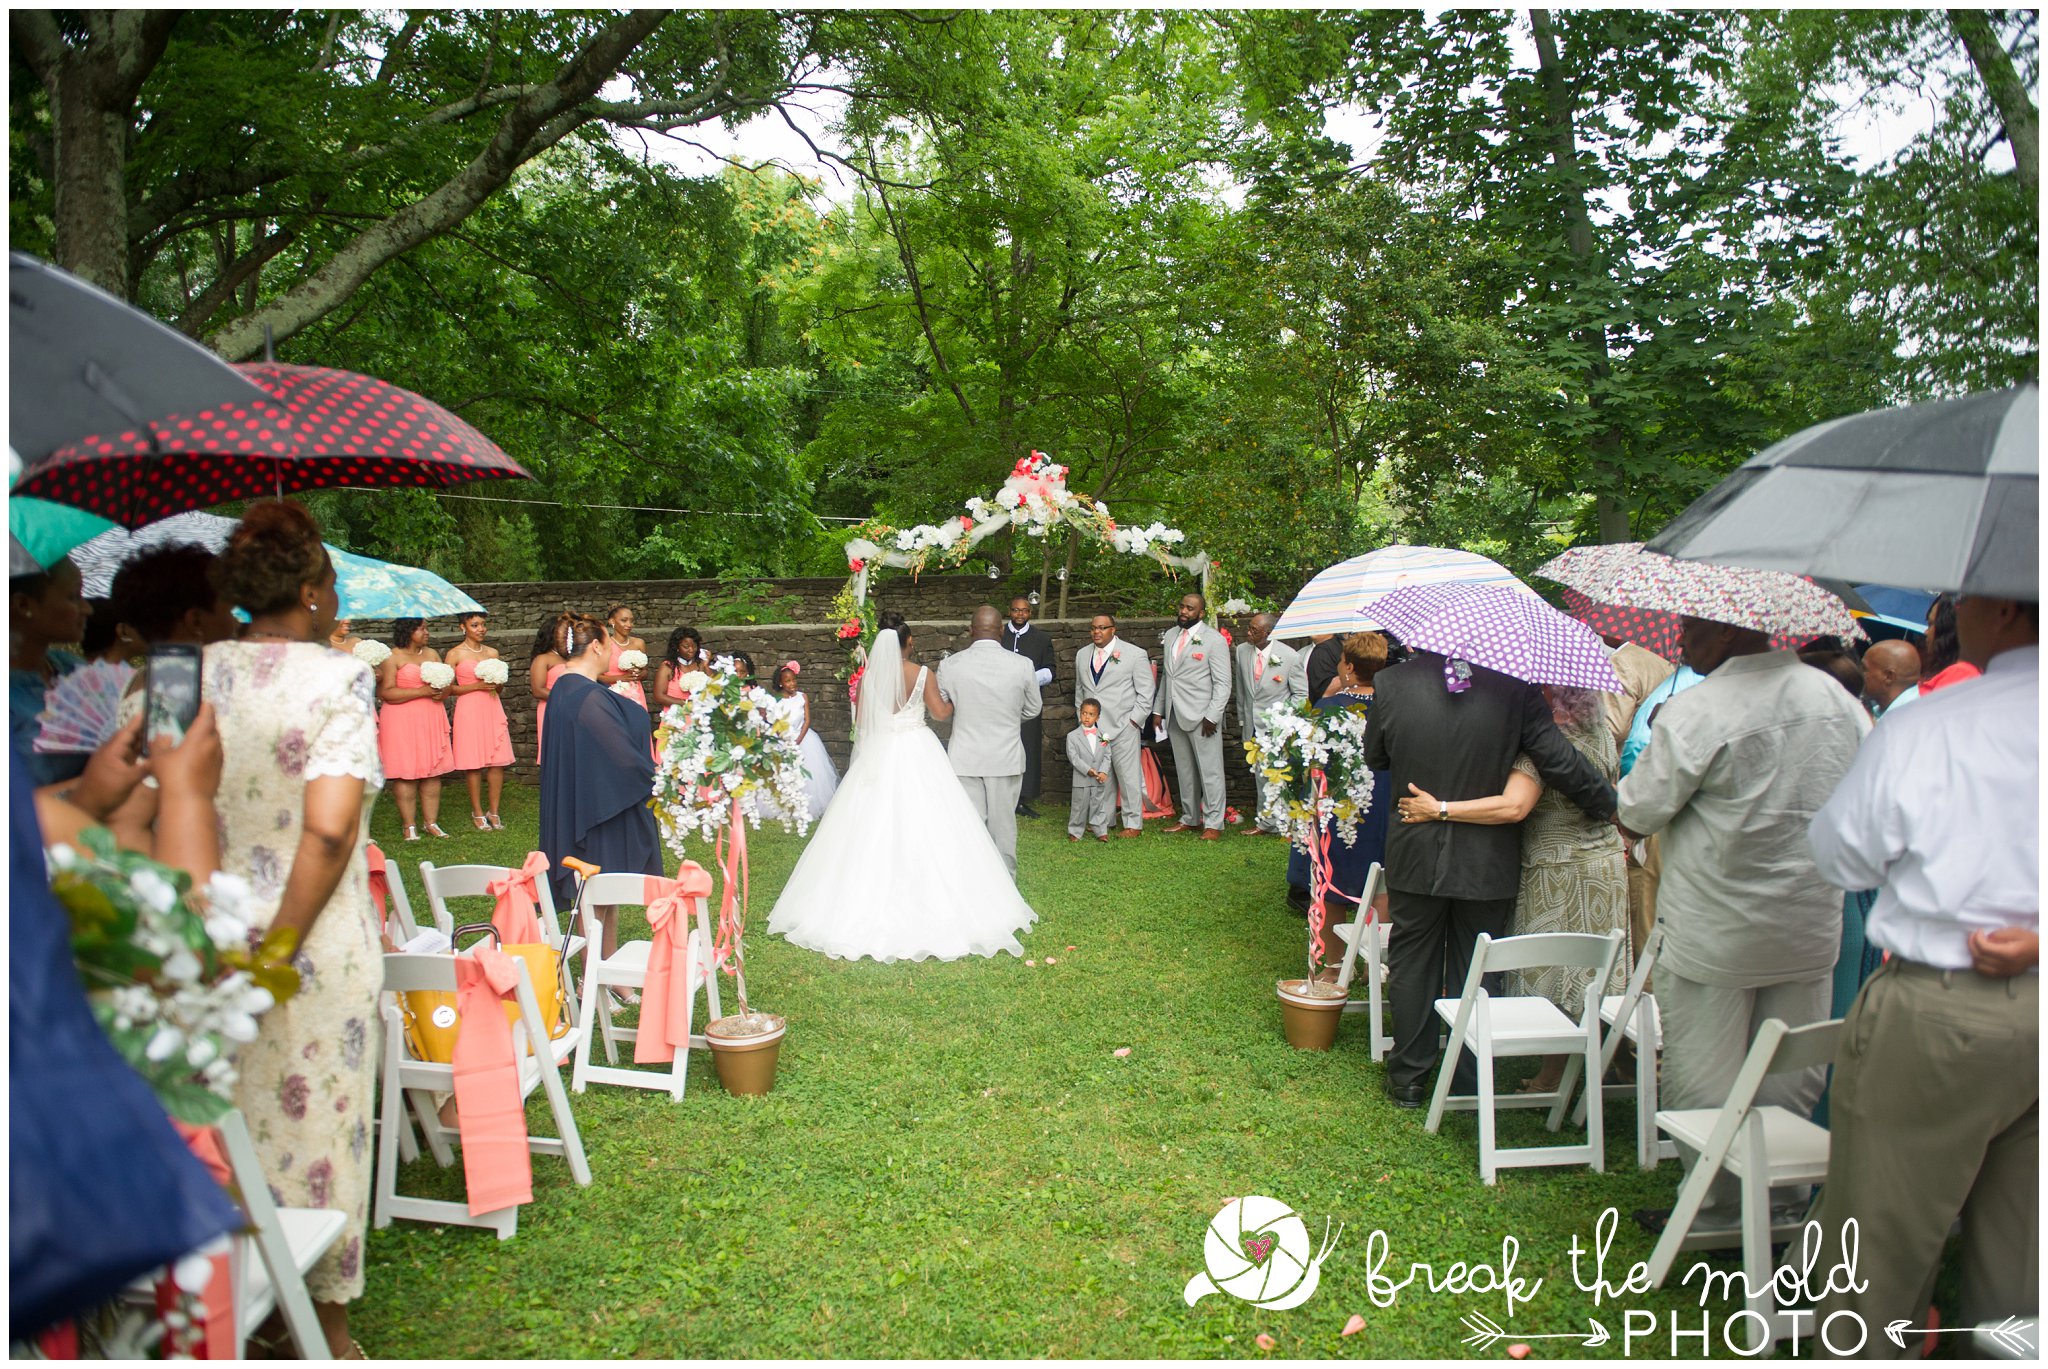 break-the-mold-photo-june-wedding-garden-rain-unique_7991.jpg